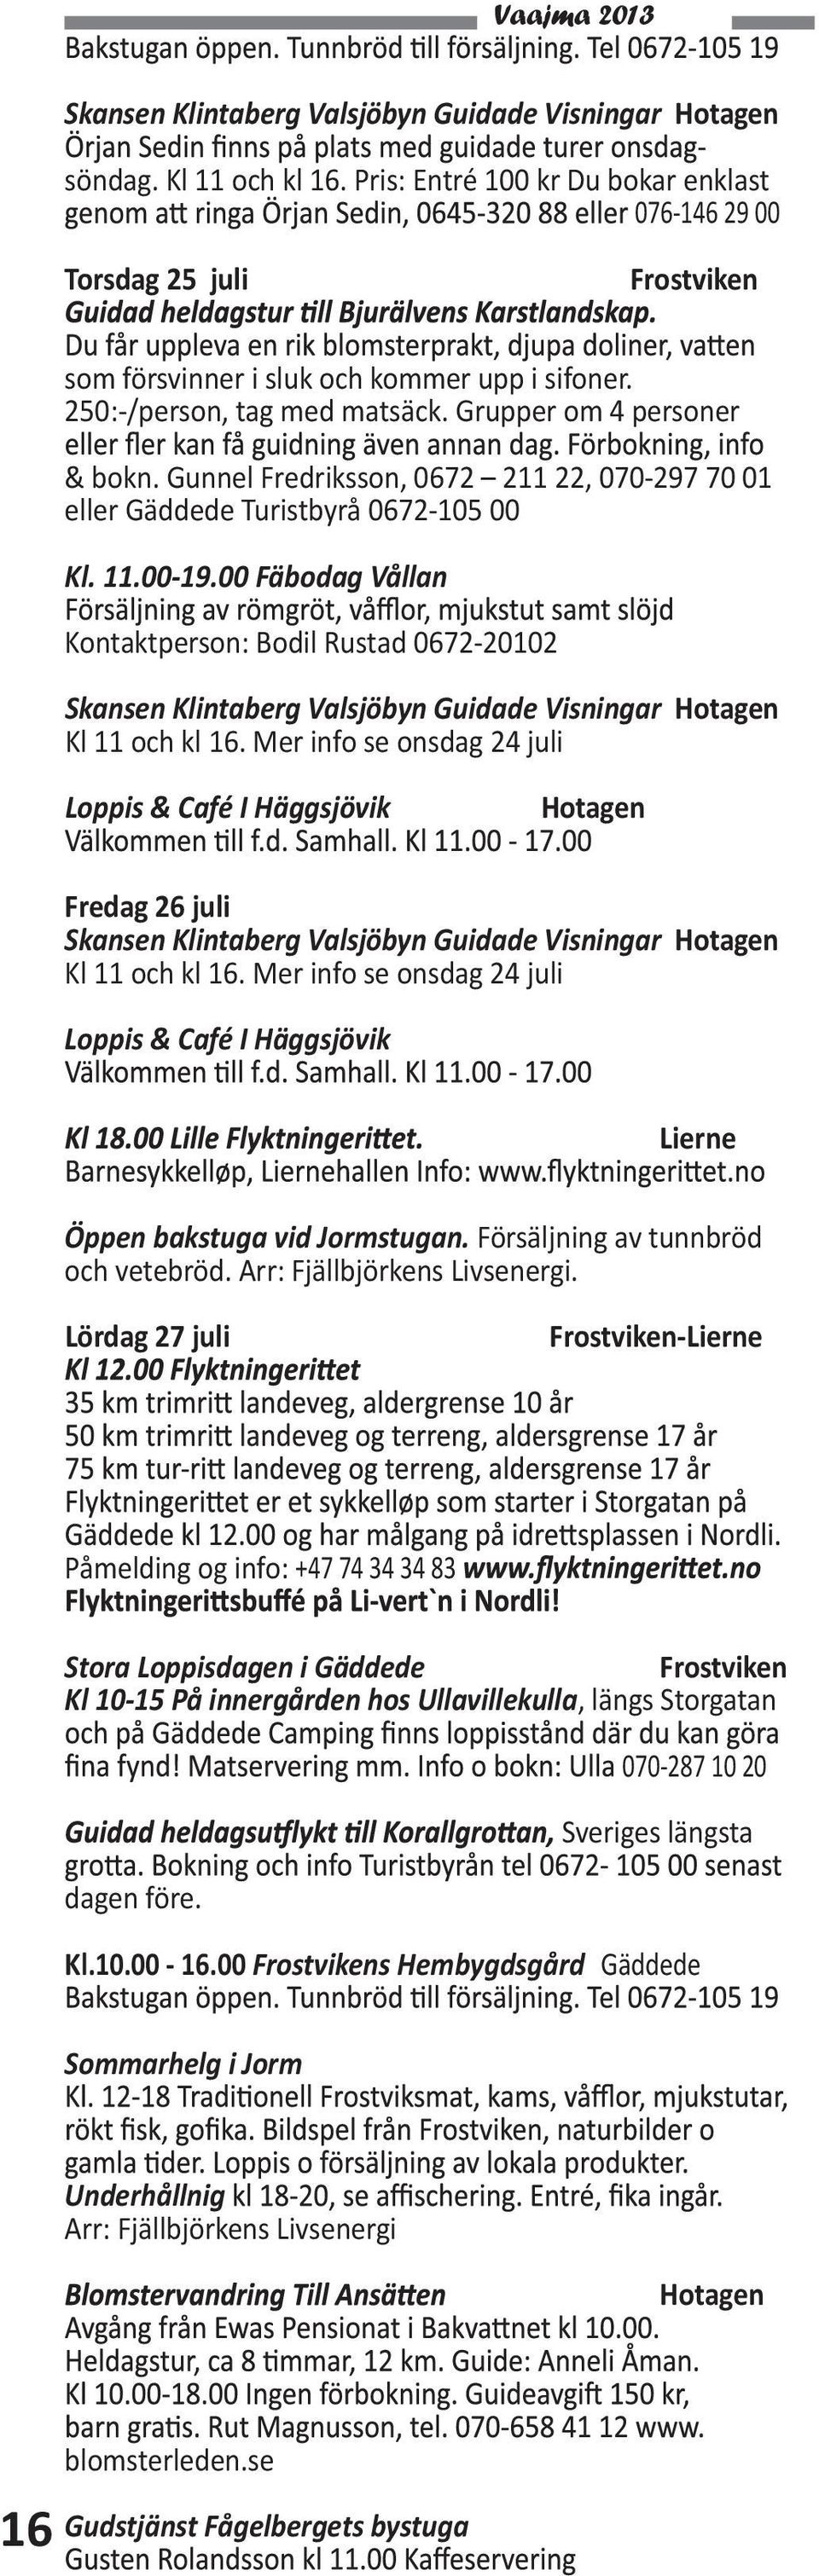 Mer info se onsdag 24 juli Loppis & Café I Häggsjövik Fredag 26 juli Kl 11 och kl 16. Mer info se onsdag 24 juli Loppis & Café I Häggsjövik Lierne Öppen bakstuga vid Jormstugan.